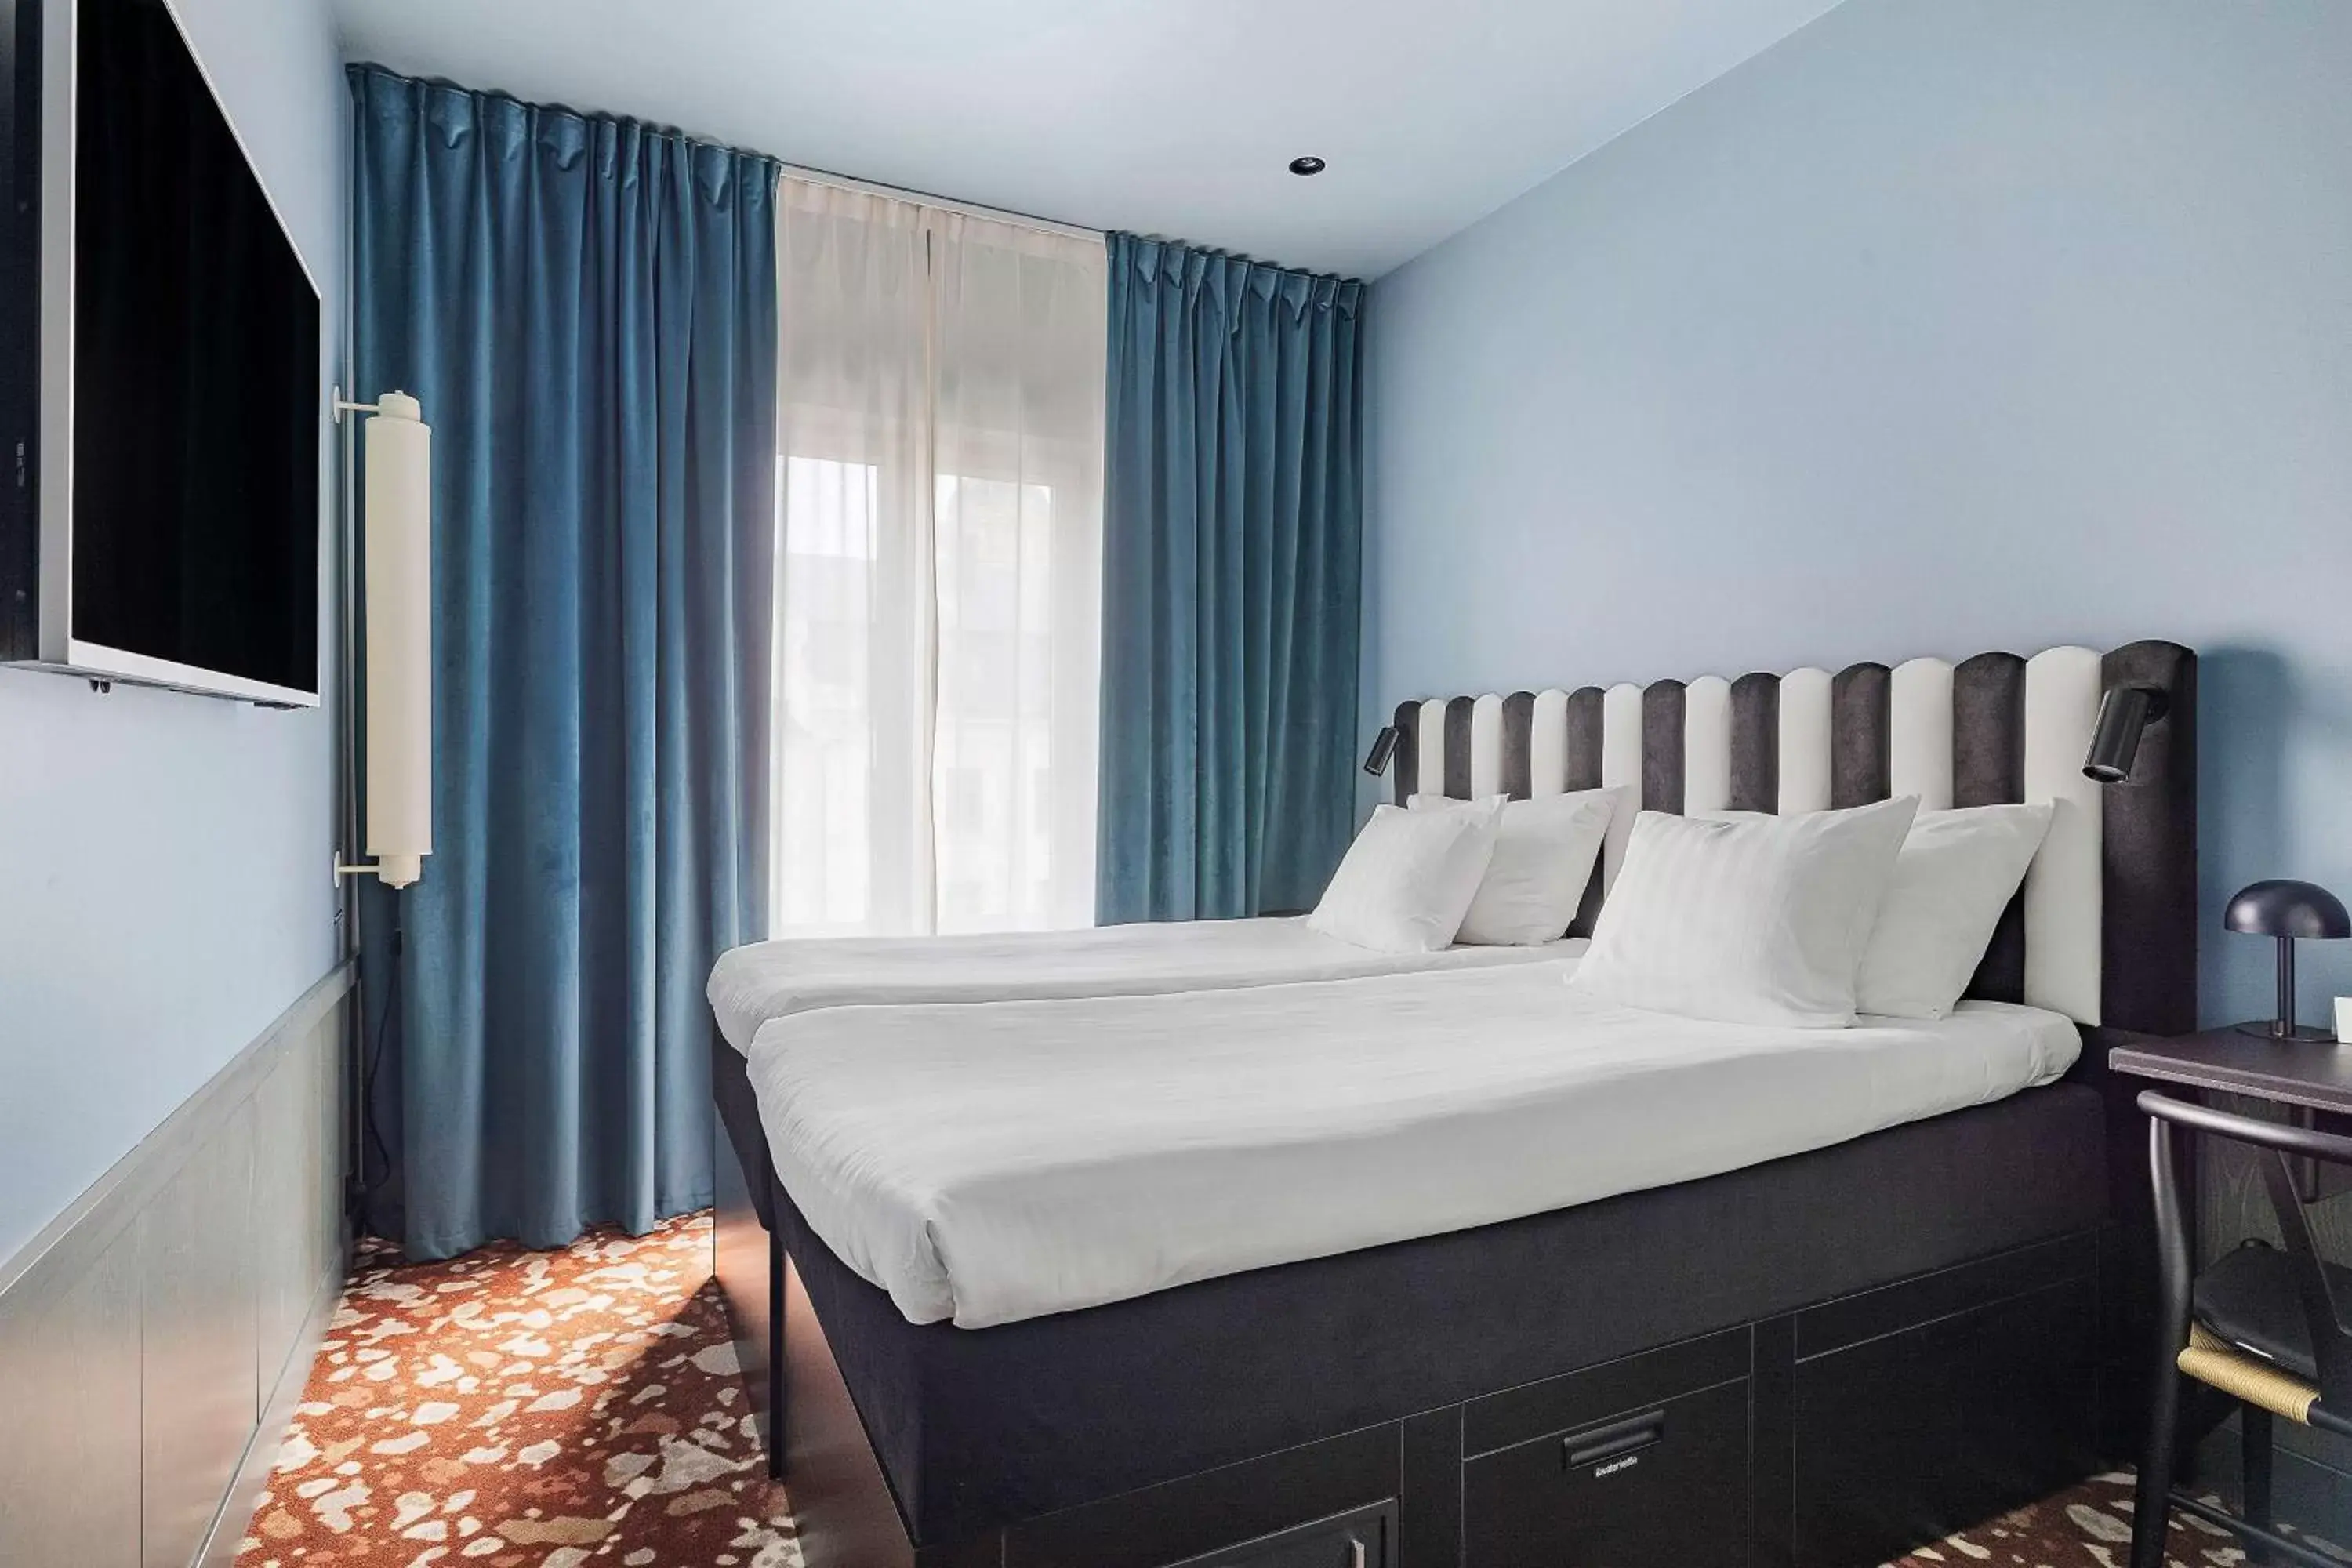 Bedroom, Bed in Best Western and Hotel Linkoping